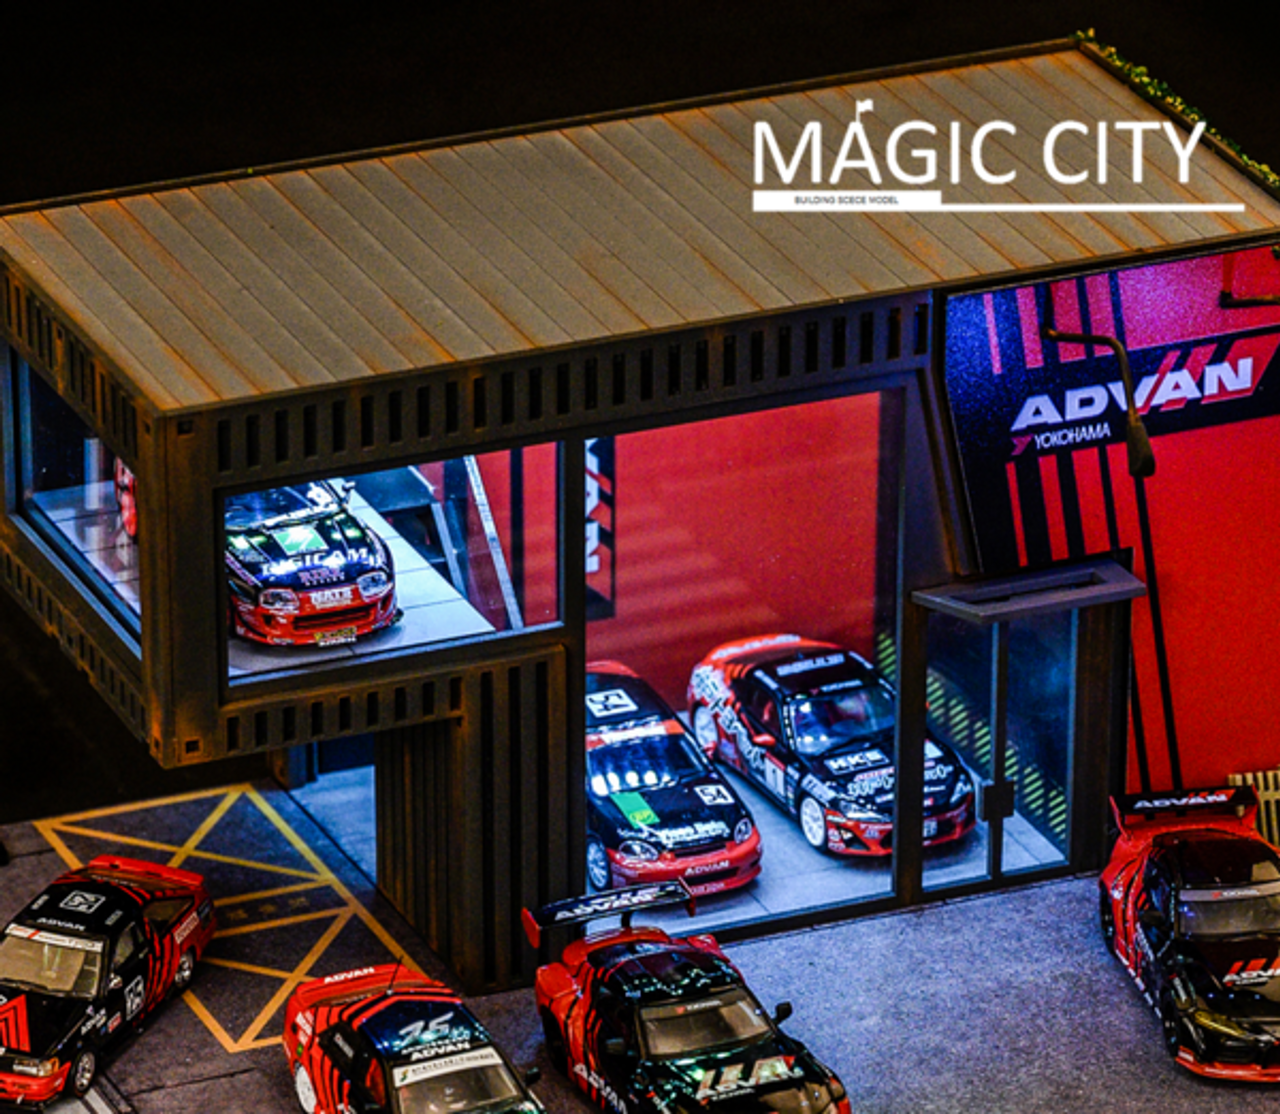 1/64 Magic City ADVAN Theme Diorama (car models NOT included)